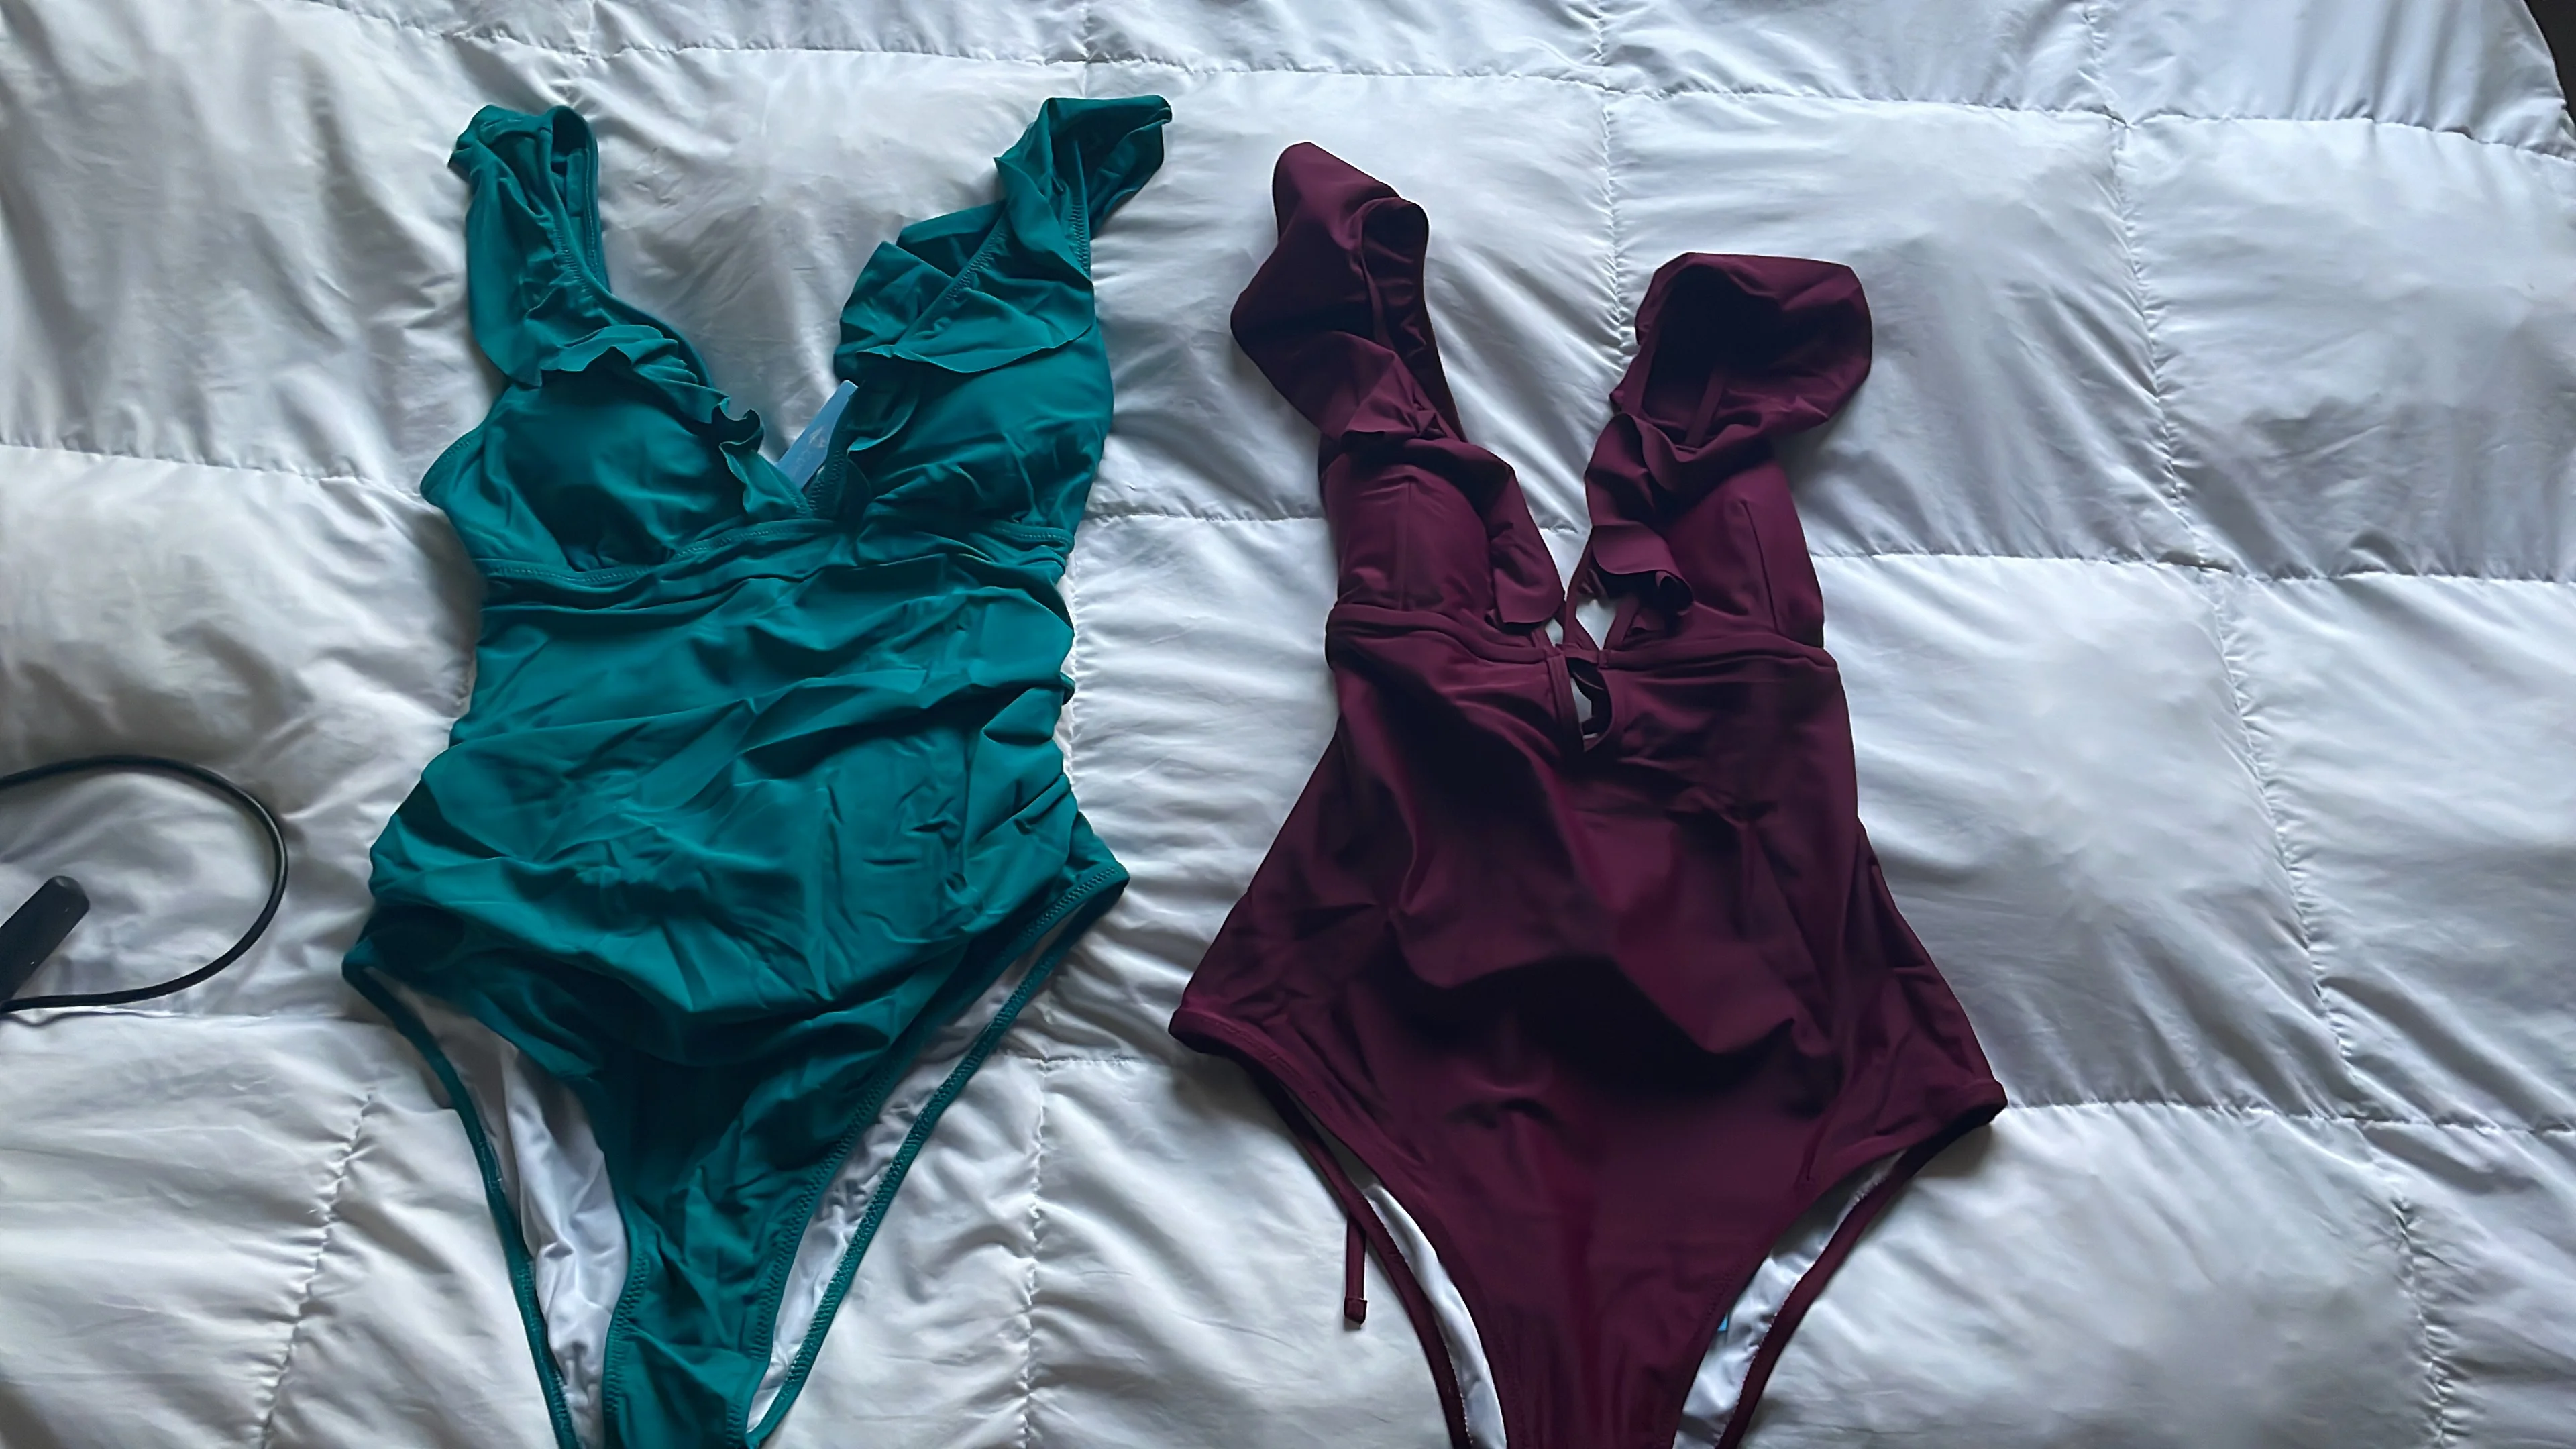 CUPSHE Burgundy Heart Attack Falbala One piece Swimsuit Women Ruffle V neck Monokini 2022 New Girls Beach Bathing Suit Swimwear|Body Suits|   - AliExpress